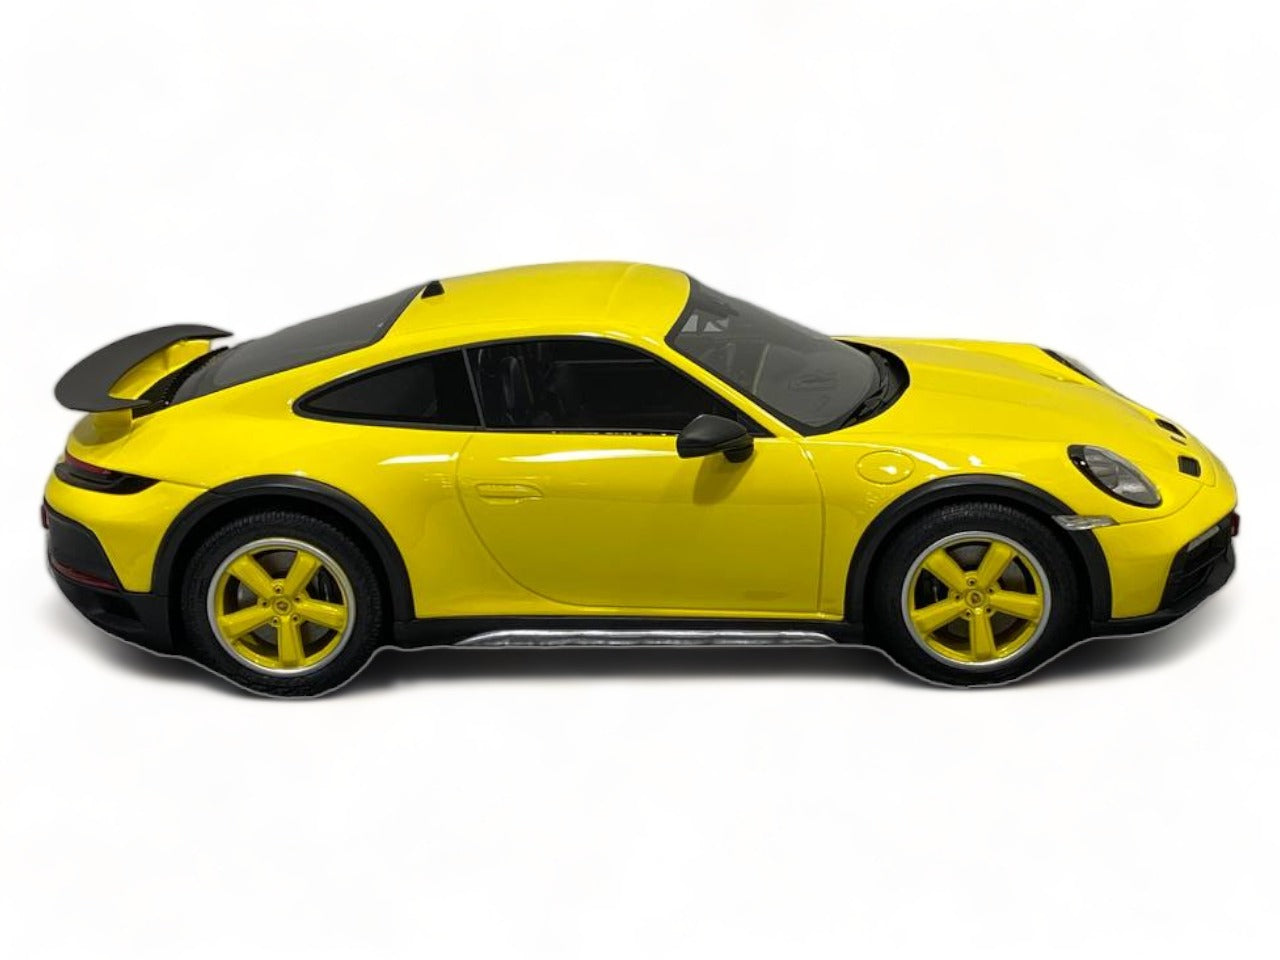 VIP Models Porsche 911 DAKAR Limited Edition|Sold in Dturman.com Dubai UAE.